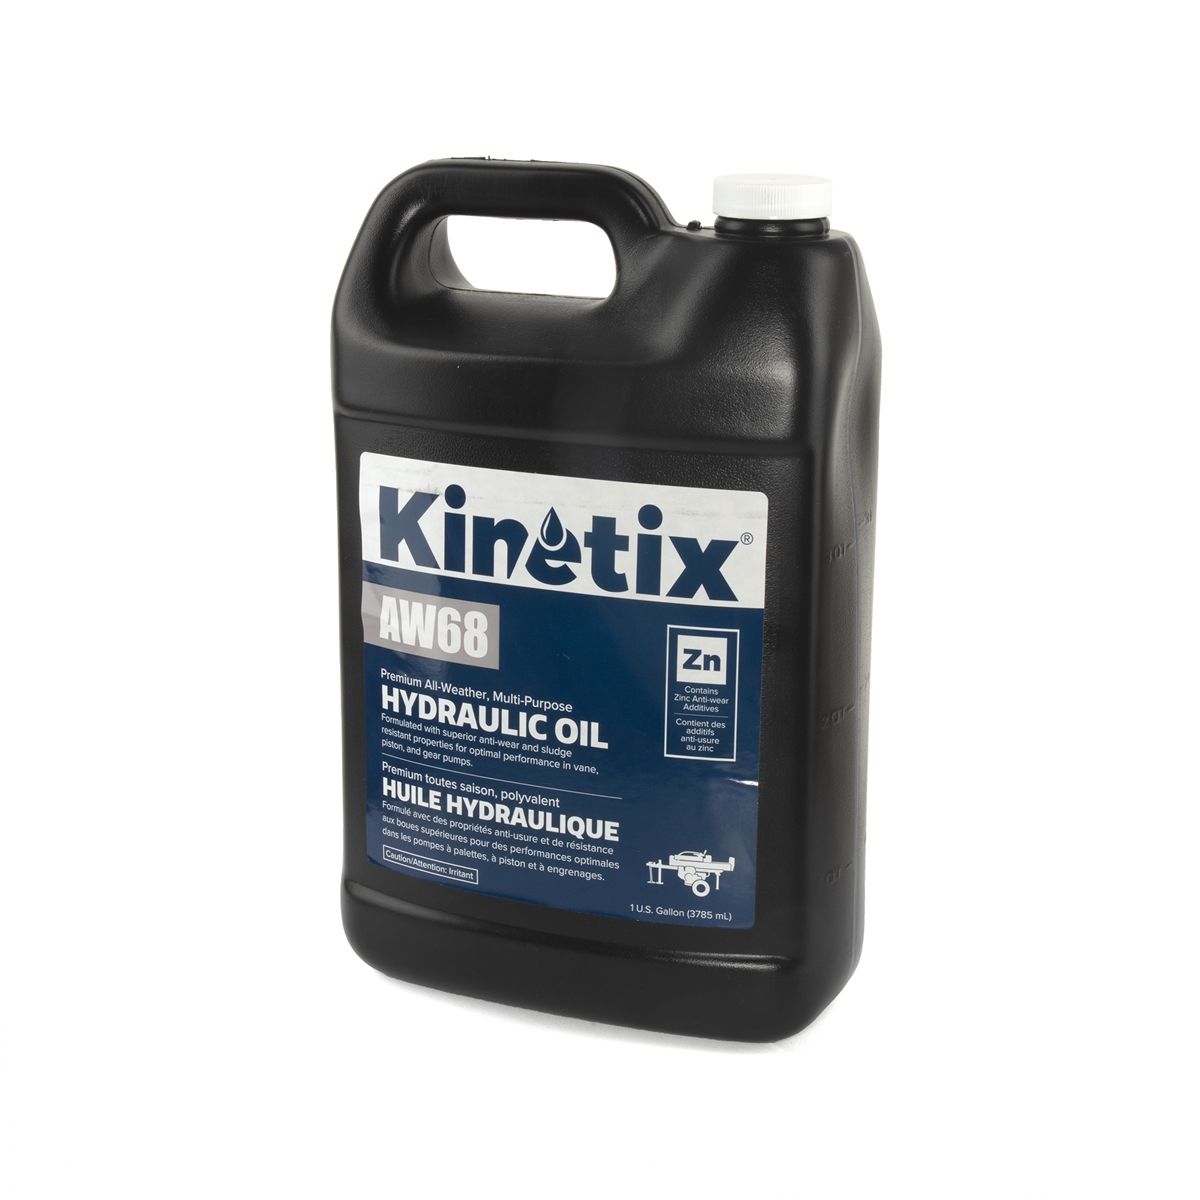 Kinetix Premium All-Weather Multi-Purpose AW32 Hydraulic Oil 5 Gallons 80071